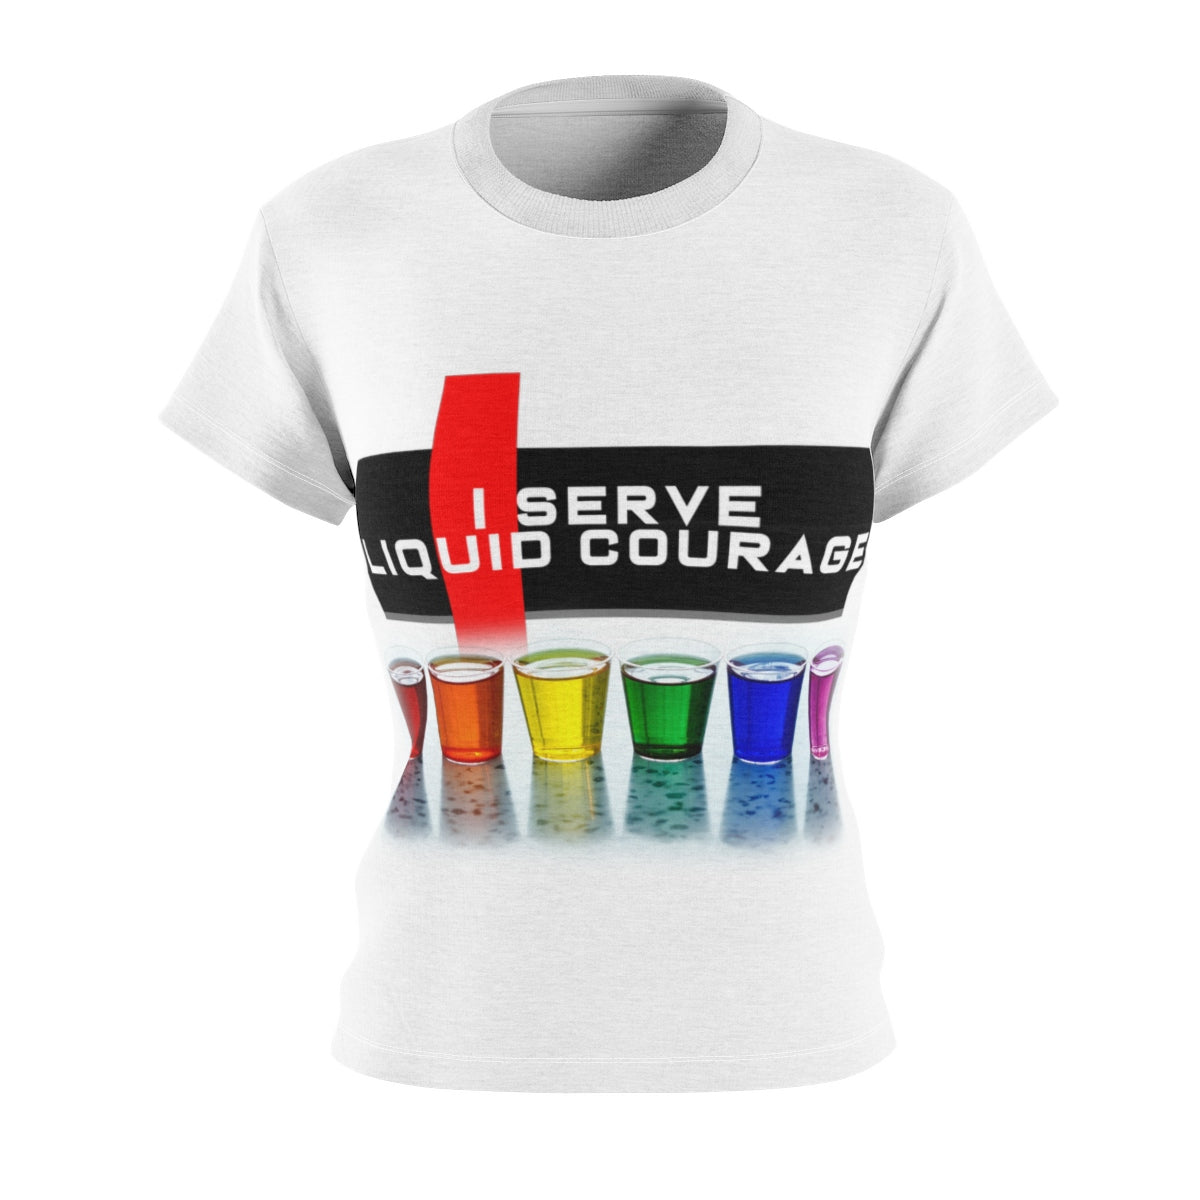 I serve liquid courage